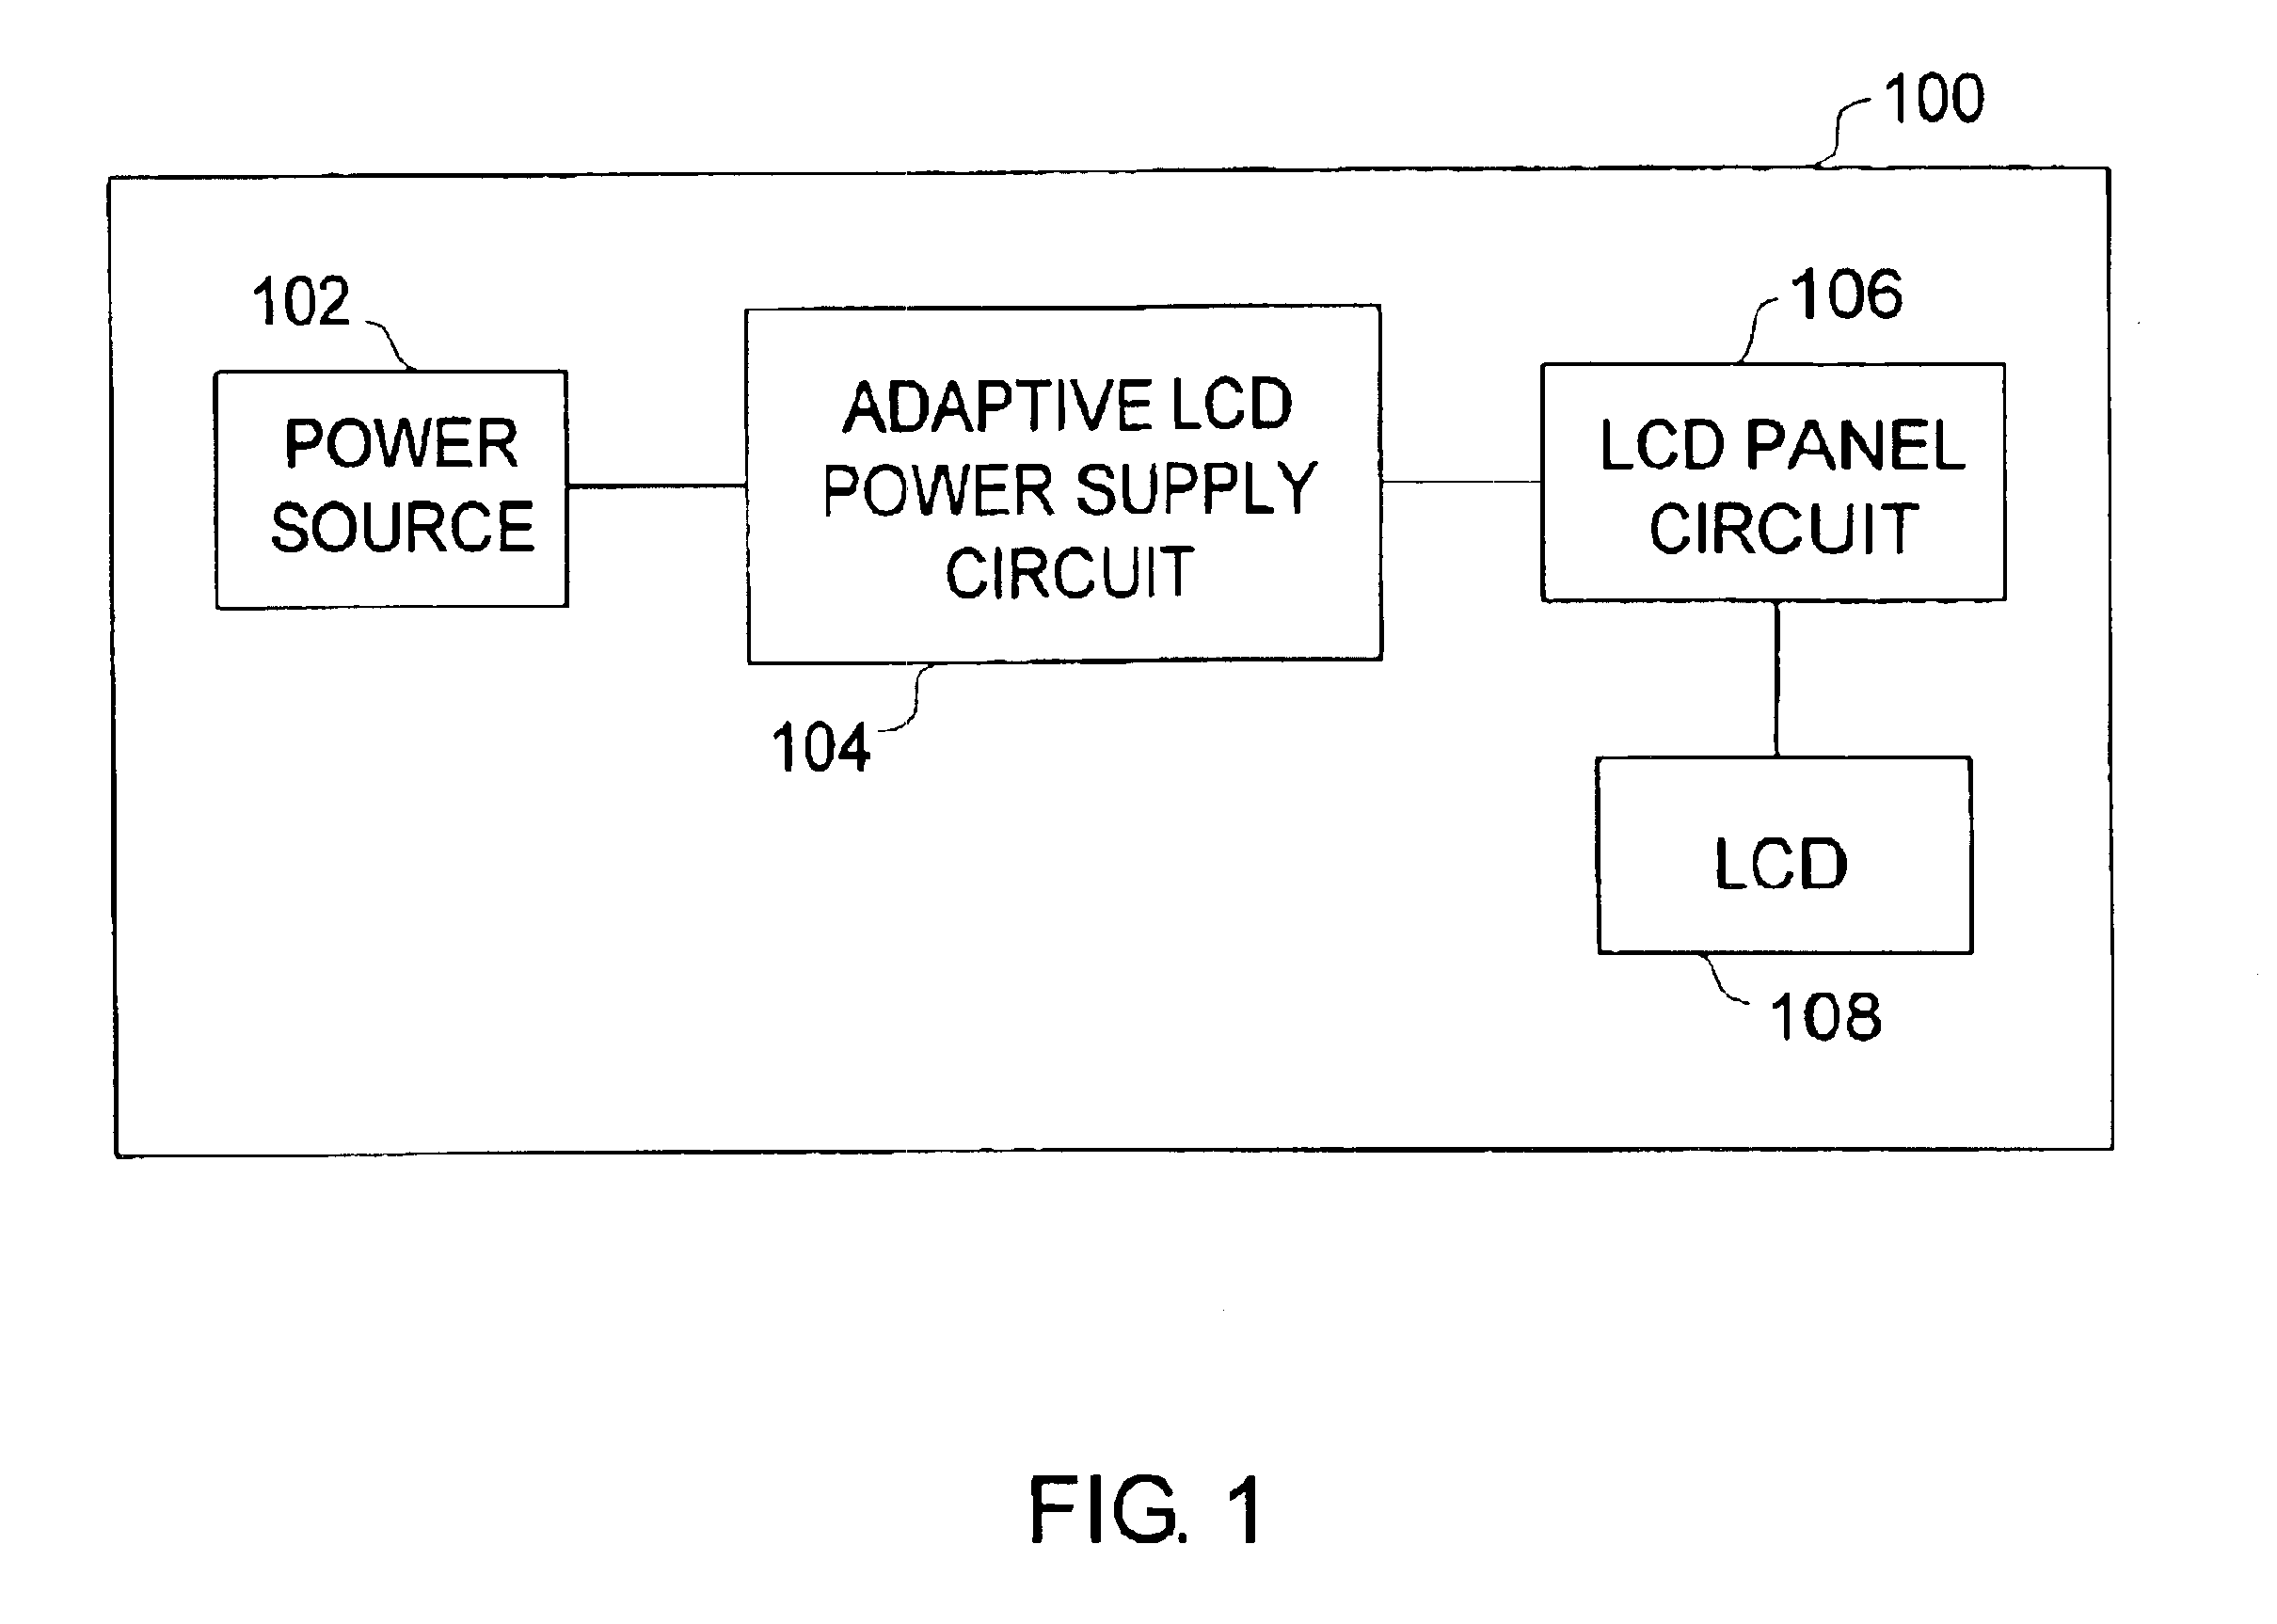 Adaptive LCD power supply circuit